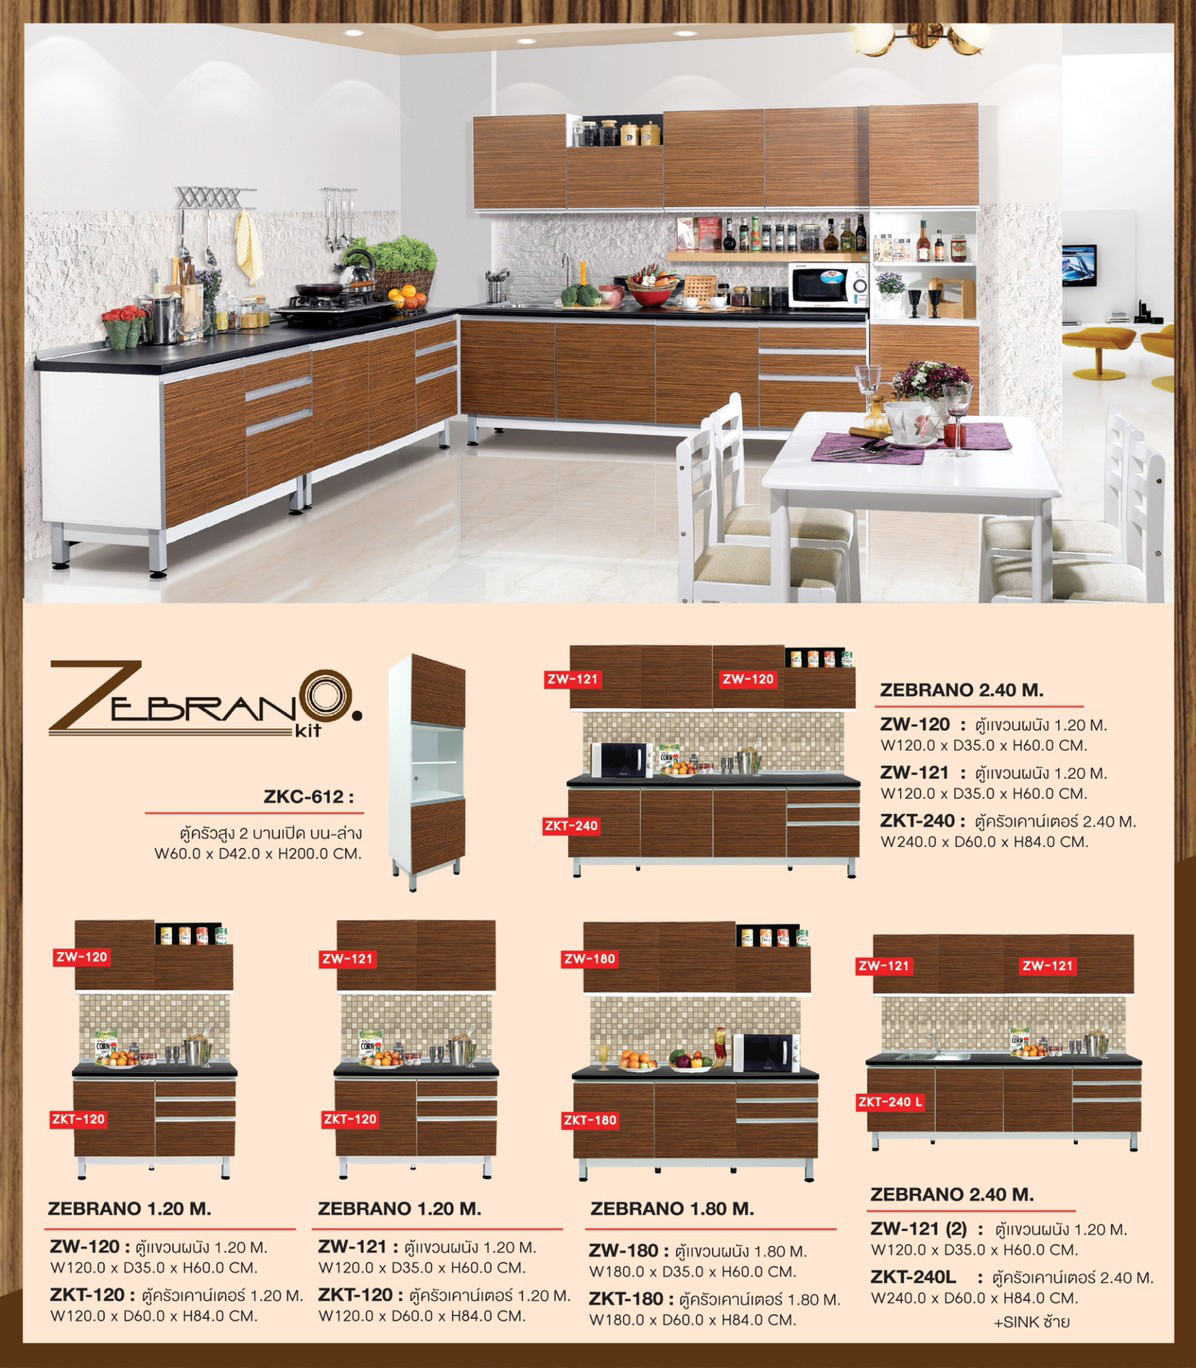 08078::ZKT-240L::ตู้ครัวเคาน์เตอร์ 2.40M.+SINKซ้าย ก2400xล600xส840 ชุดห้องครัว SURE